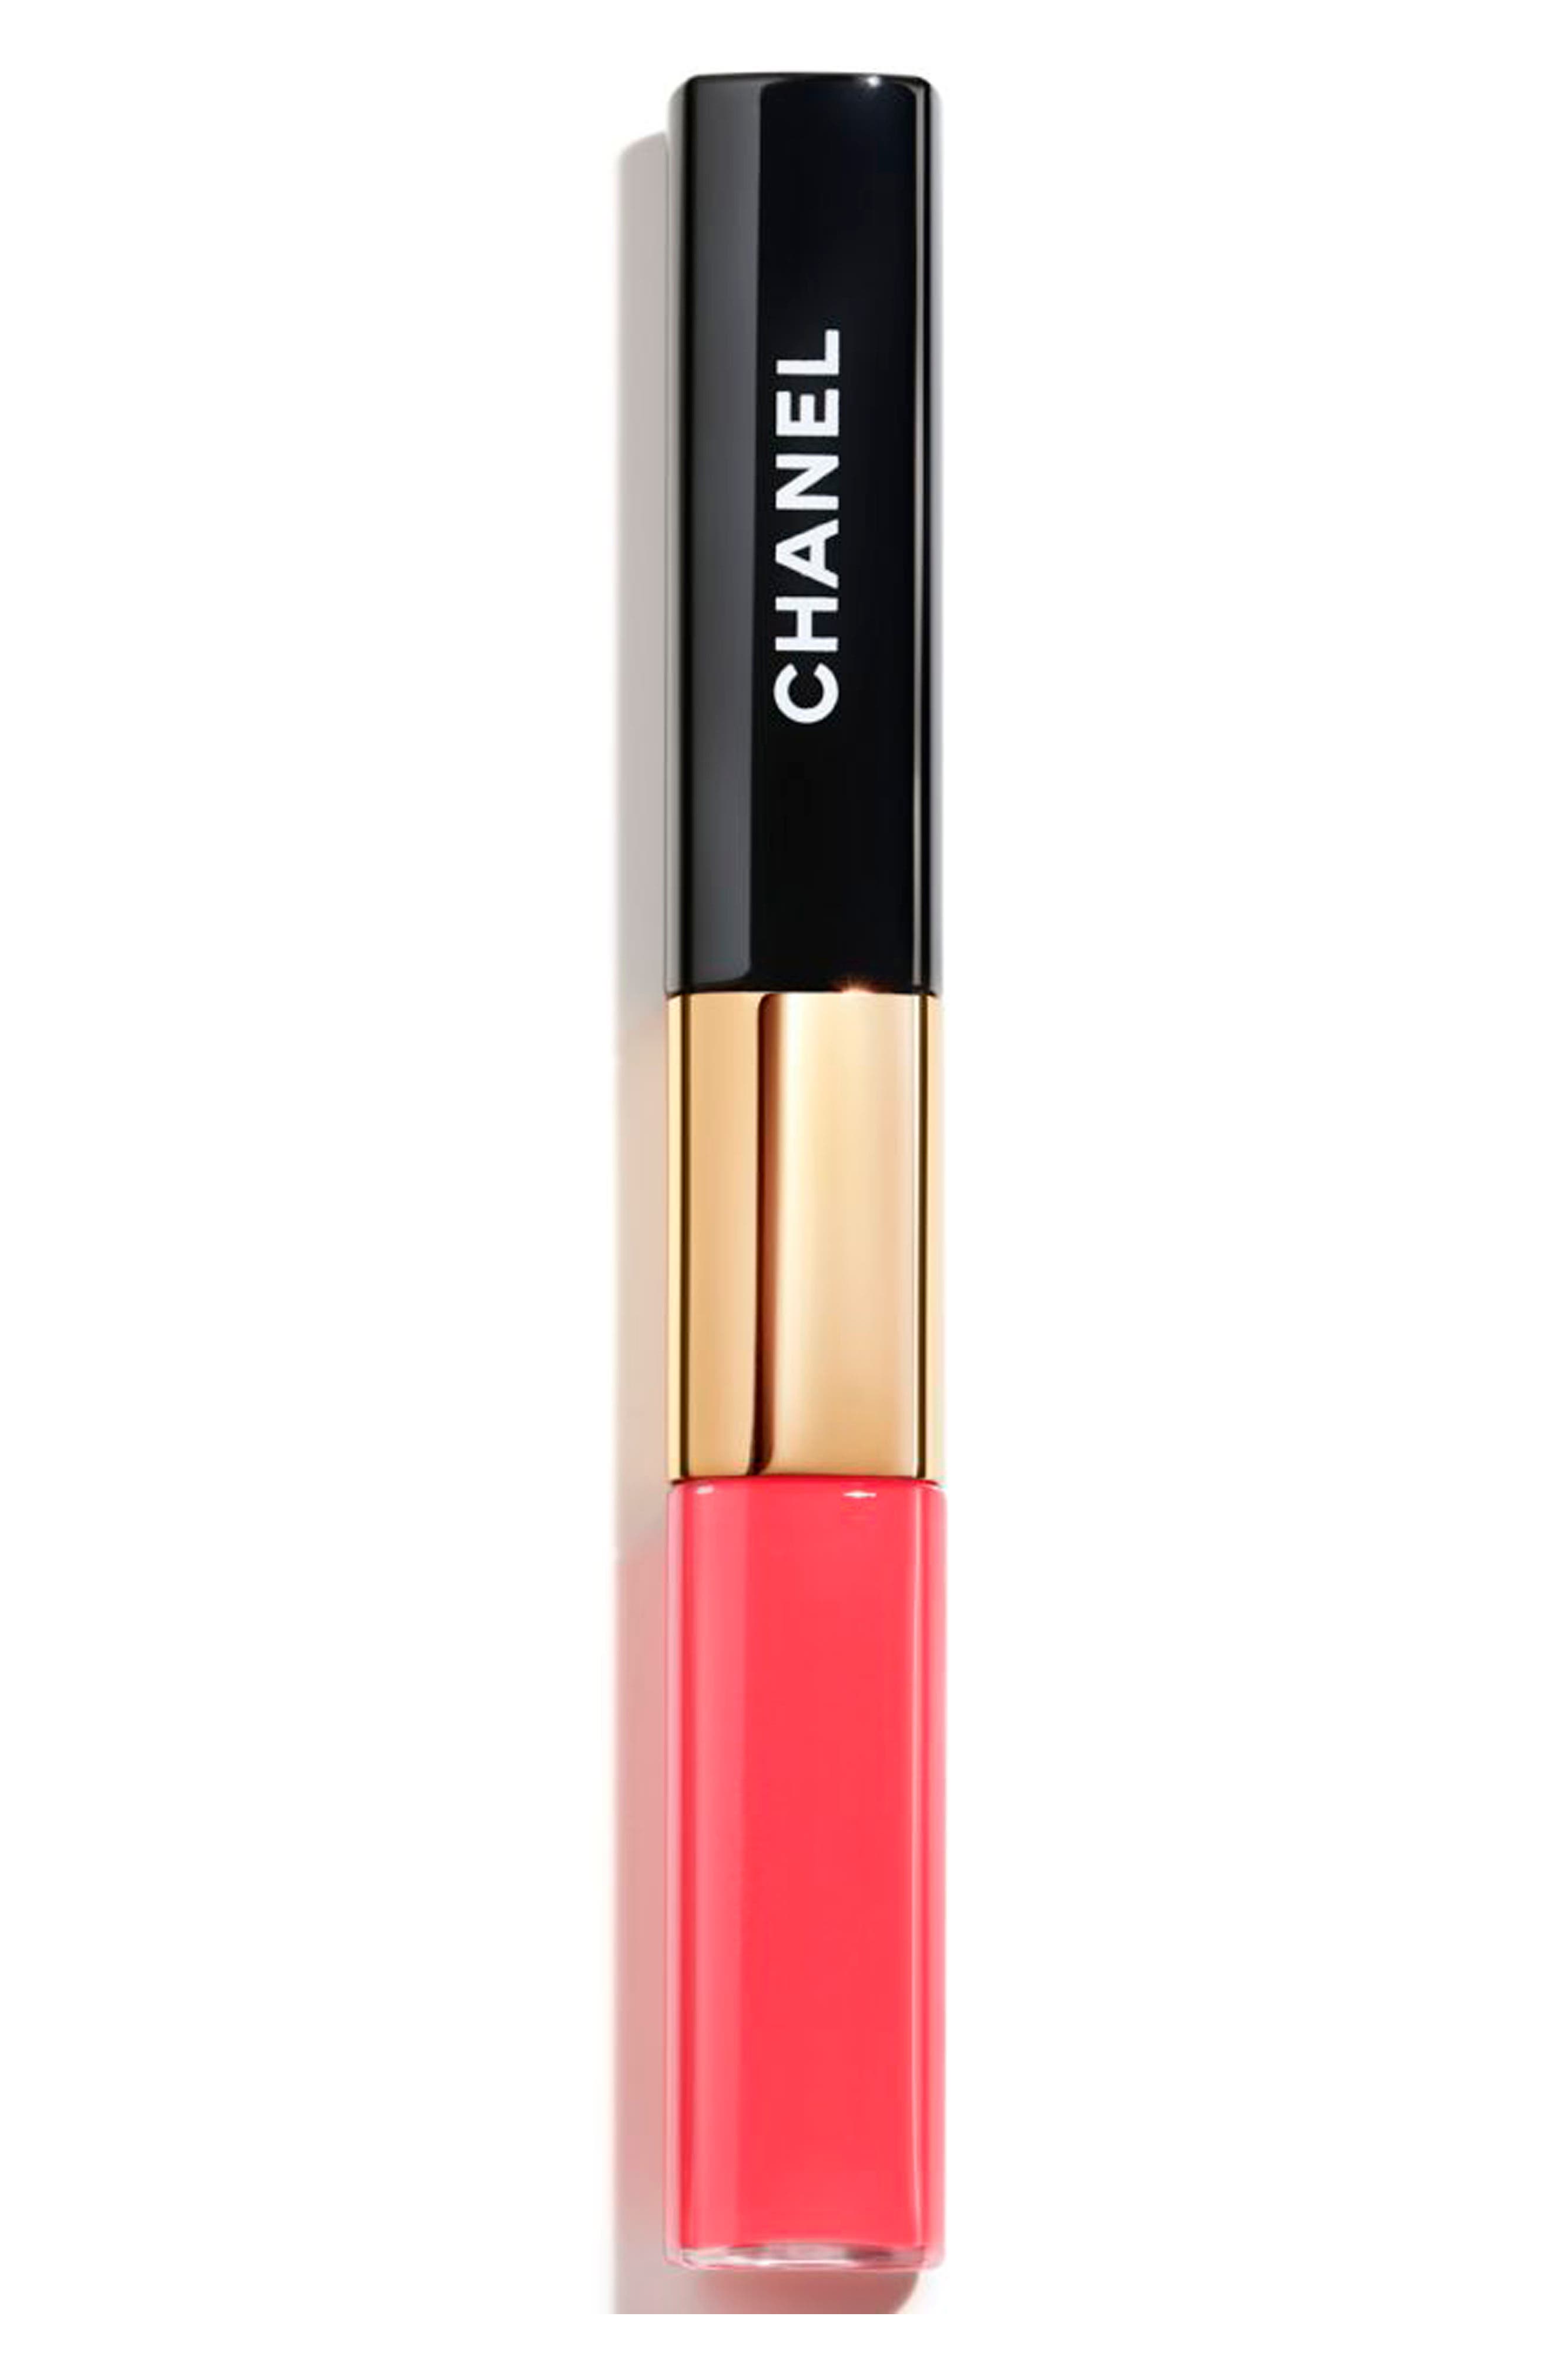 Chanel Lipstick Color Chart